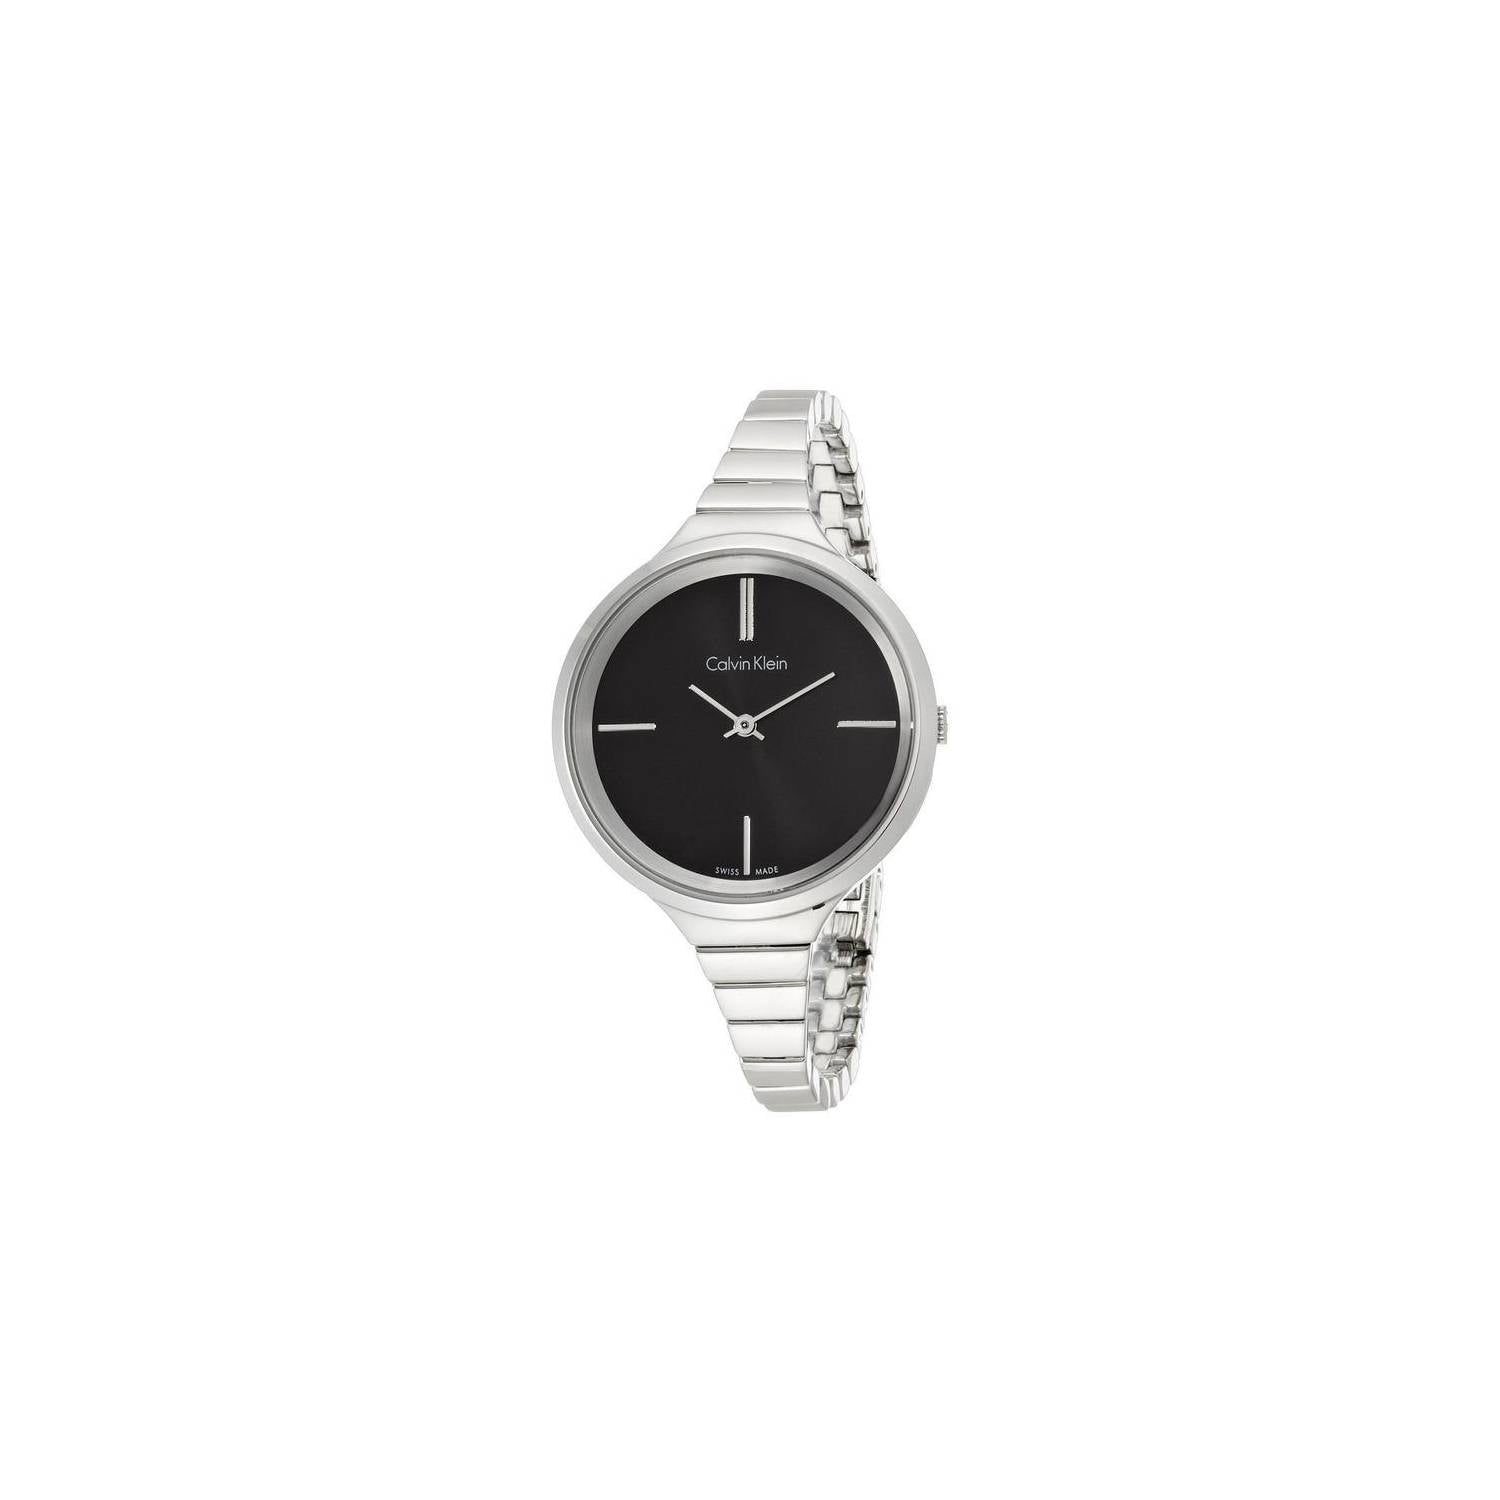 Calvin Klein Lively Black Dial Silver Steel Strap Watch for Women - K4U23121